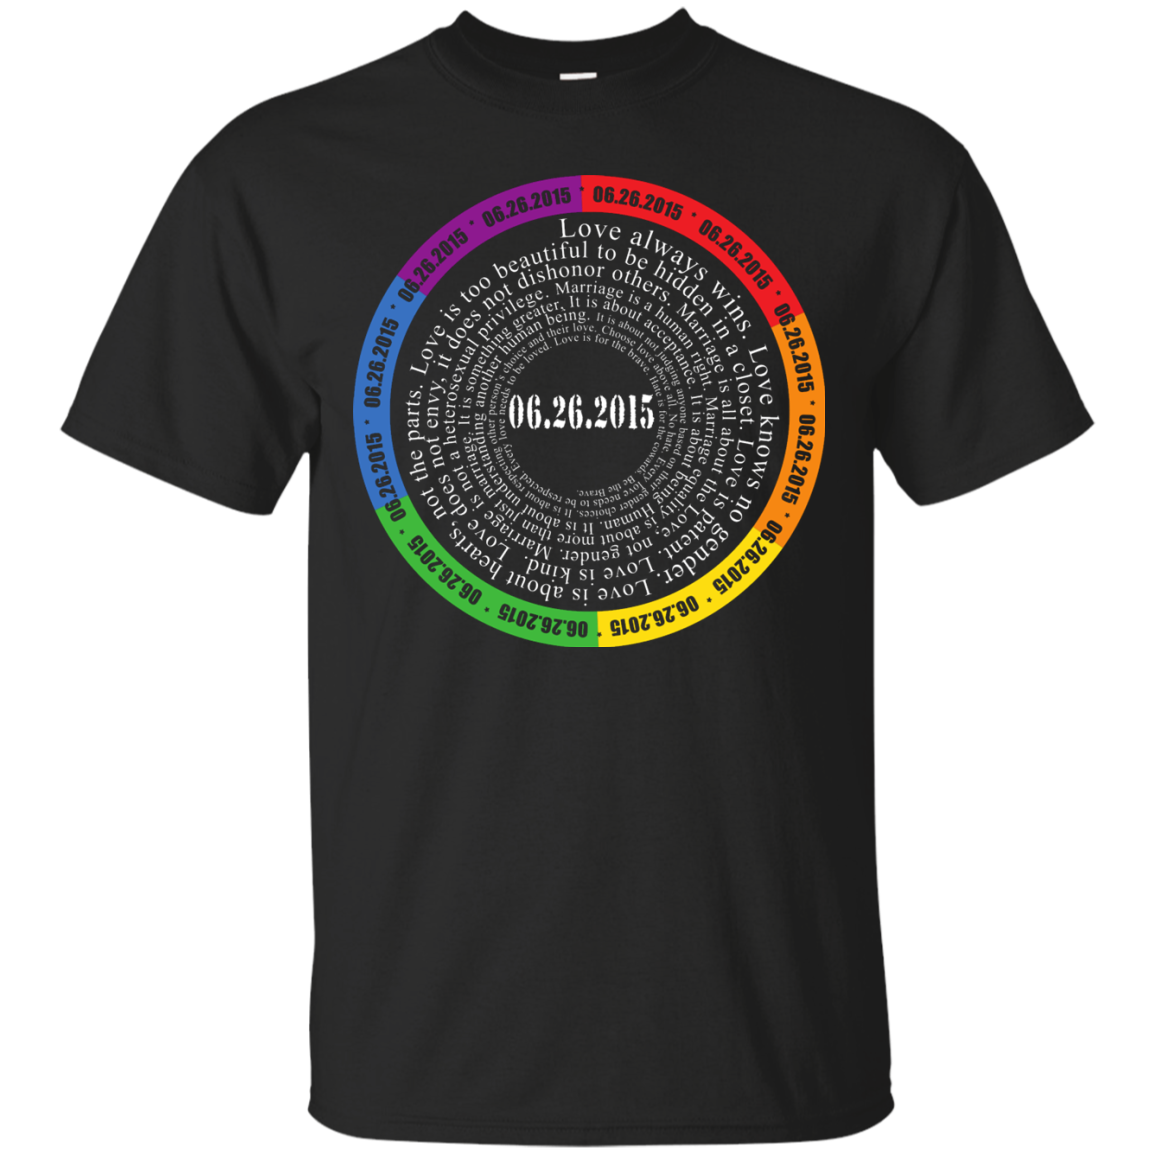 The "Pride Month" Special Shirt LGBT Pride shirt for Men gay pride shirt